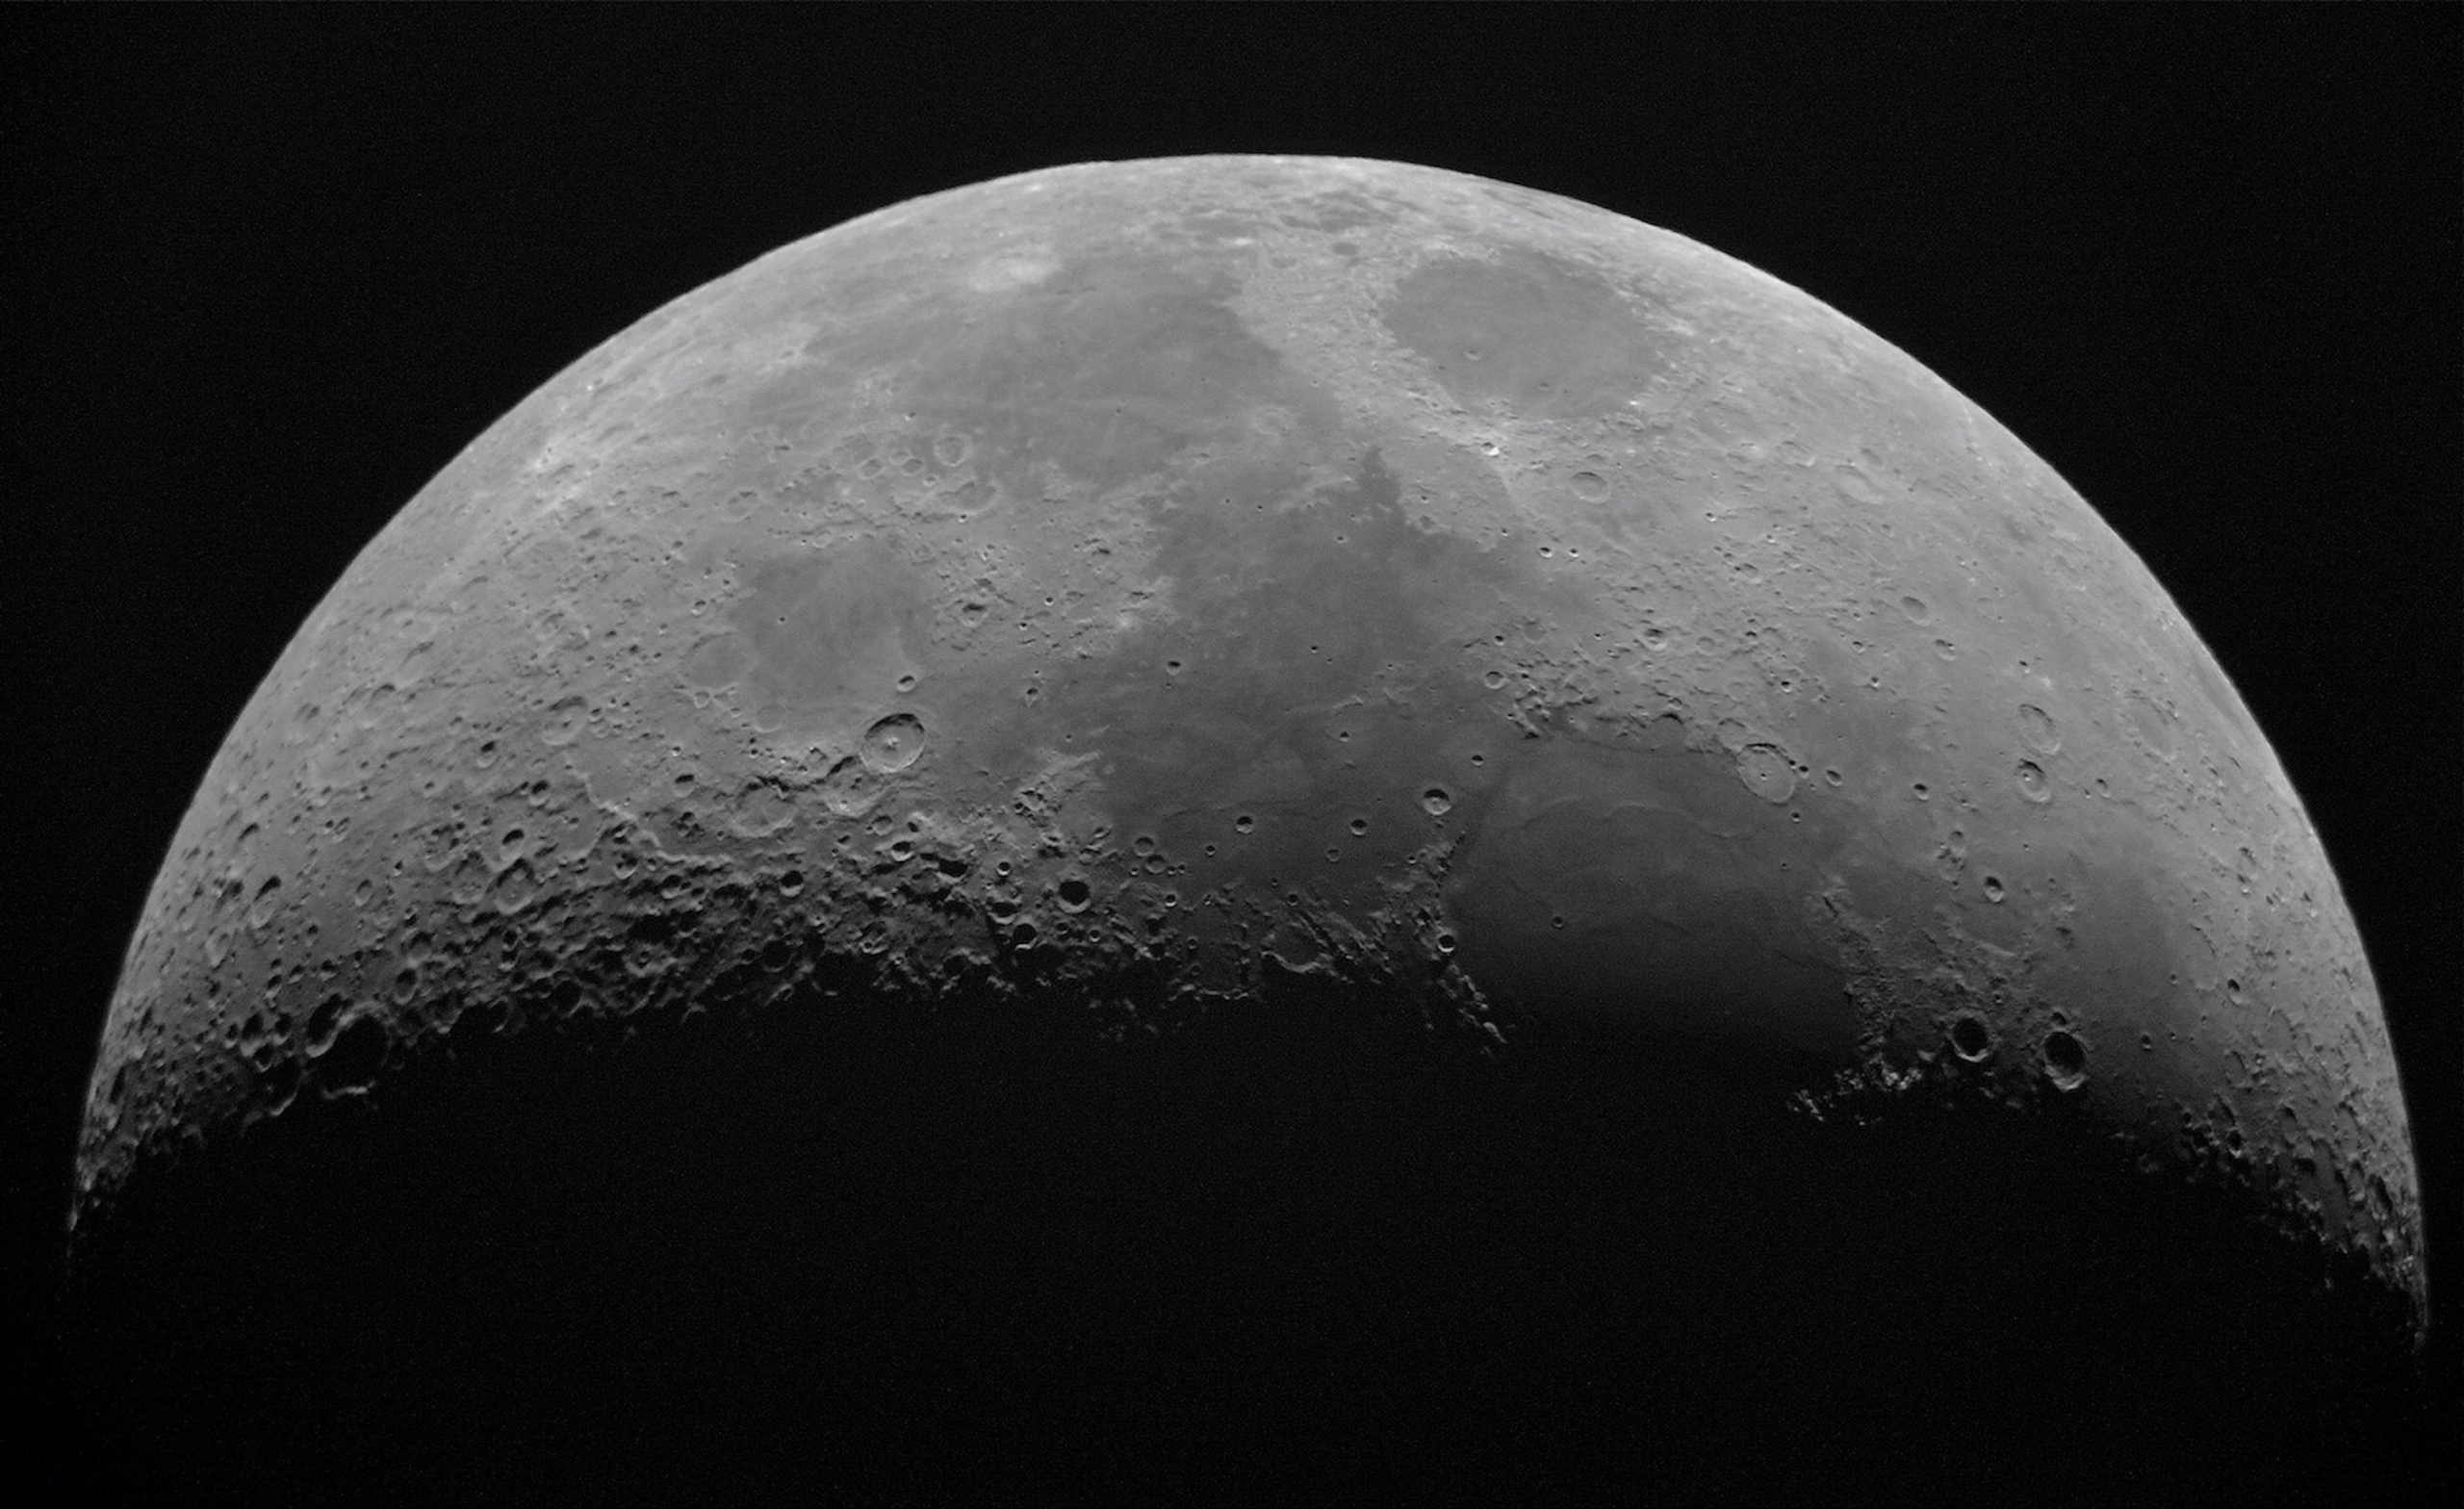 Mars, Mercury and Saturn to meet moon over Qatar’s skies in May